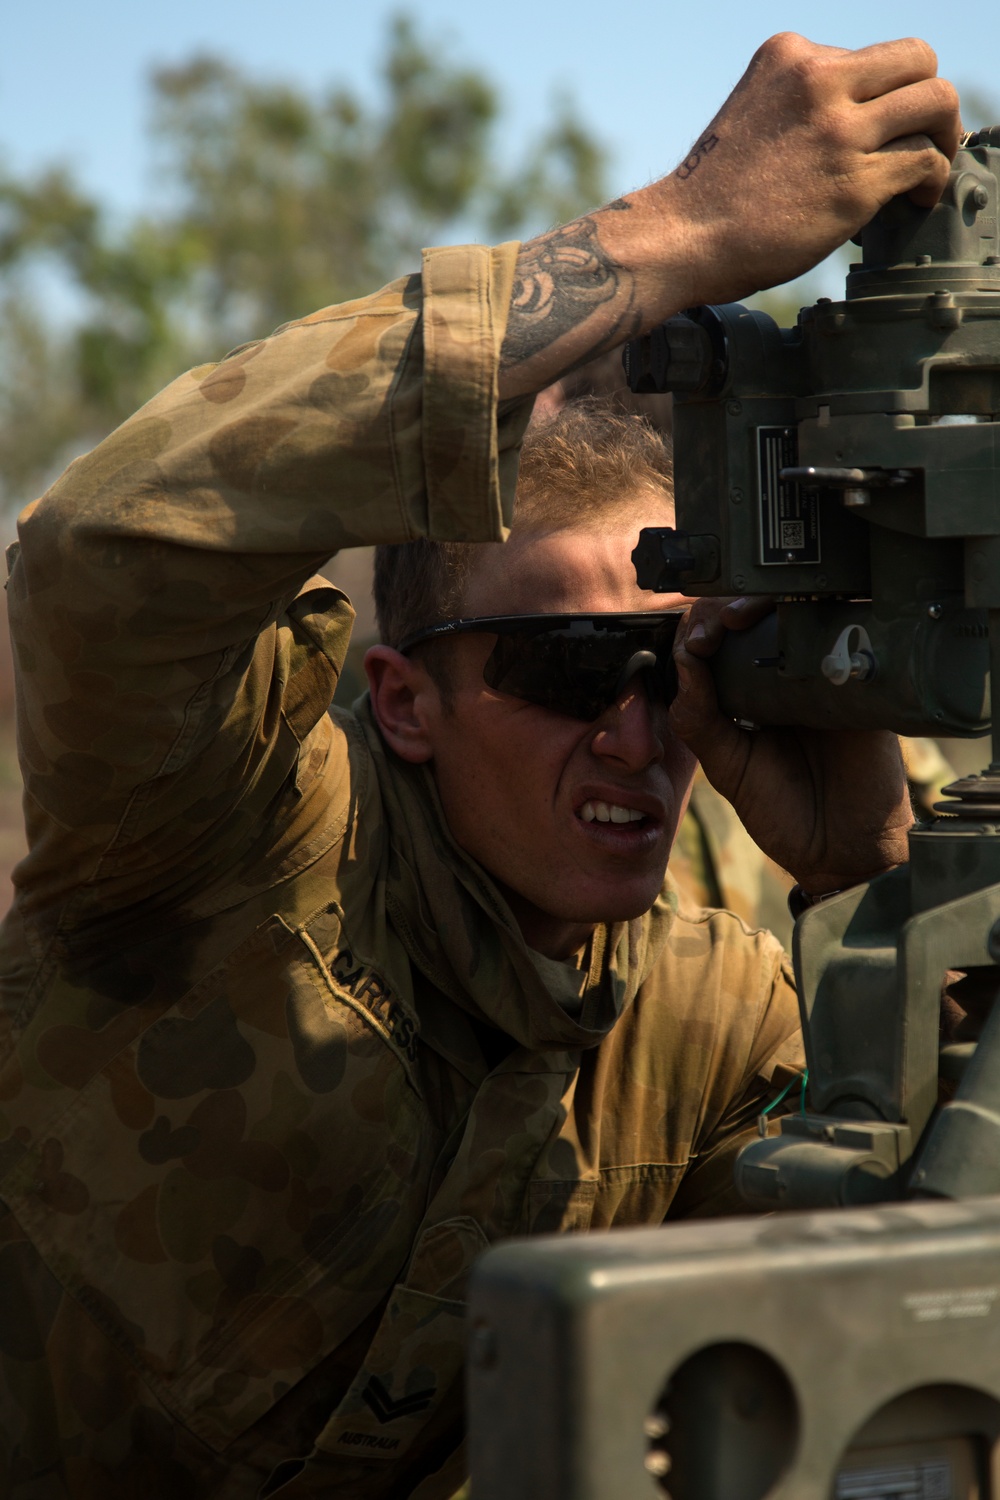 U.S. Marines, Australians conduct artillery fire